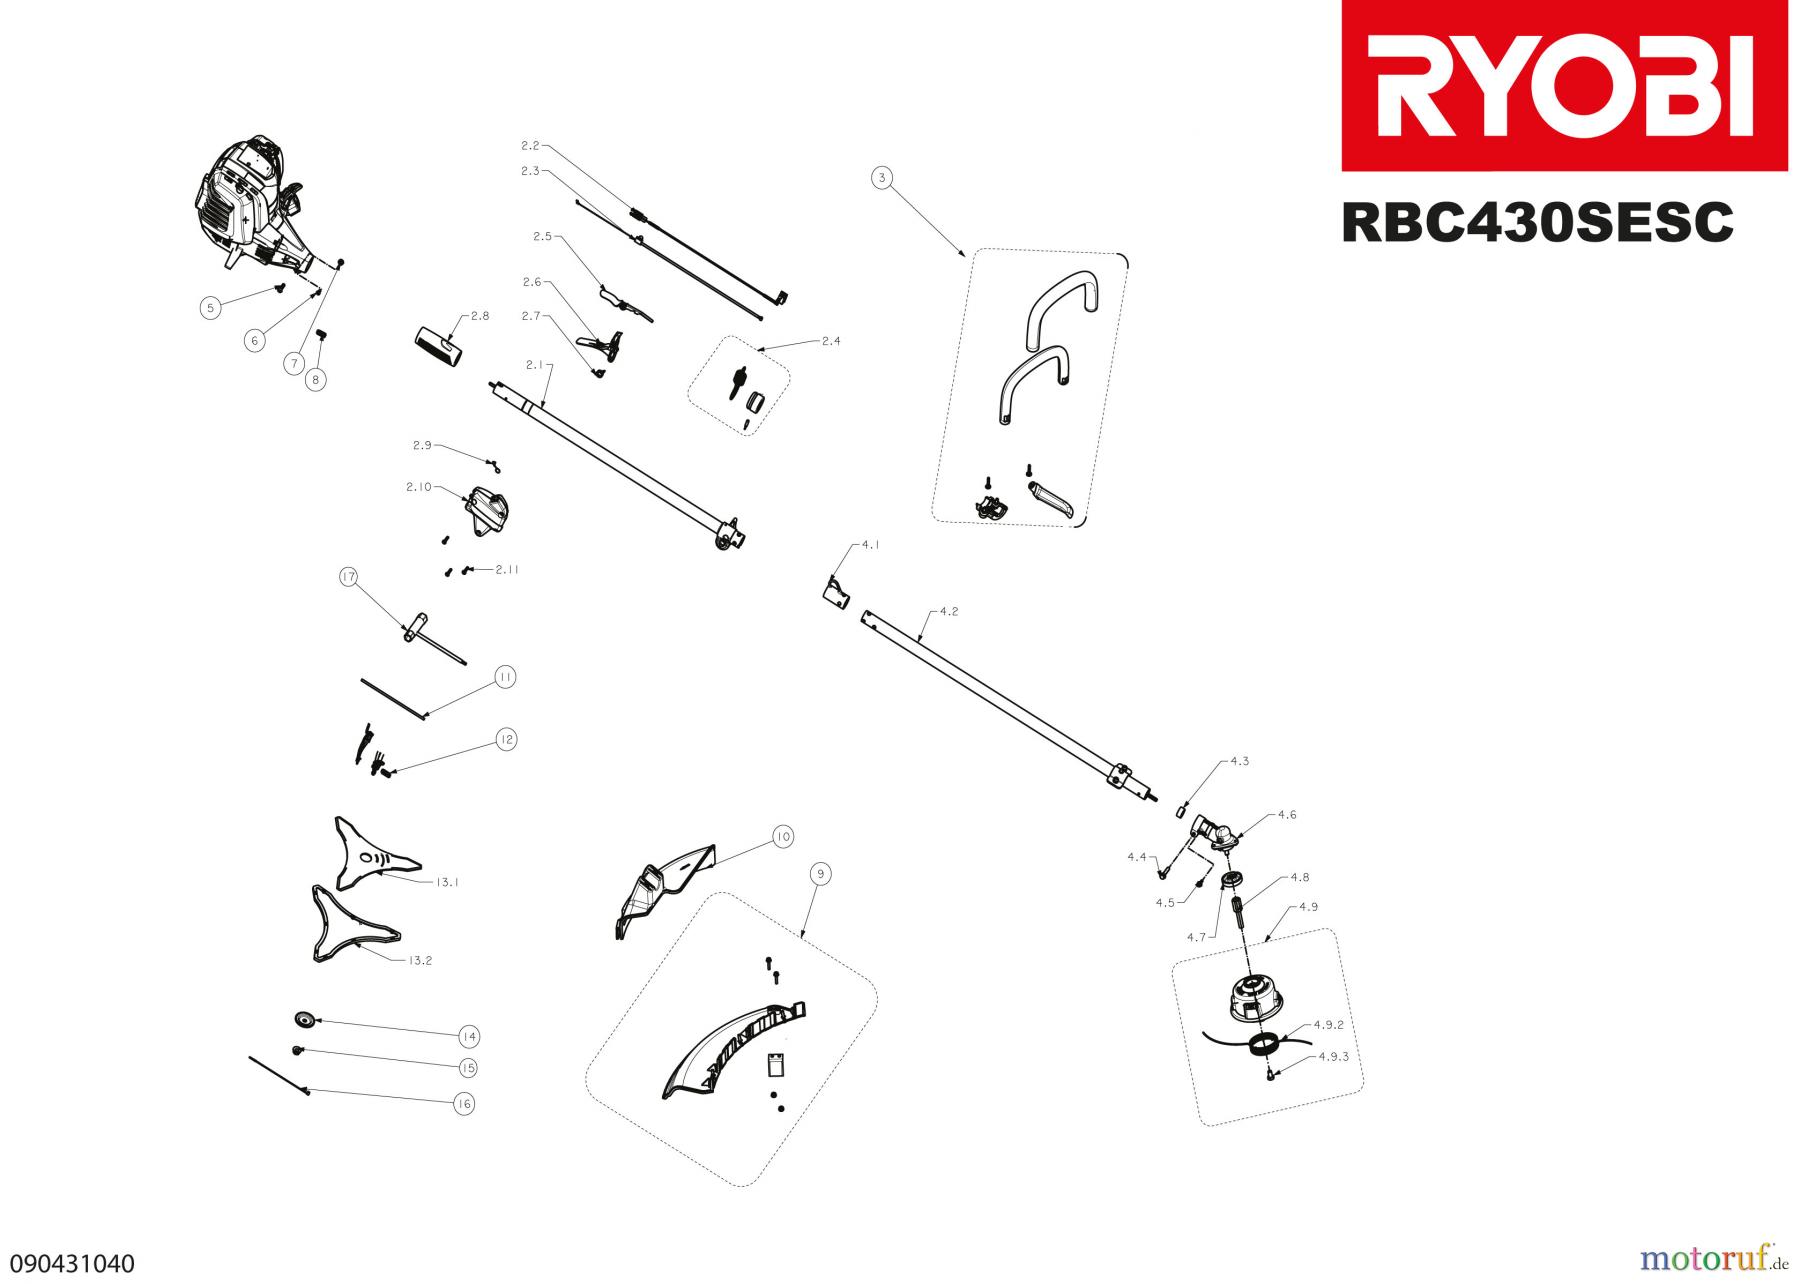  Ryobi Sensen Freischneider Benzin RBC430SESC Seite 1